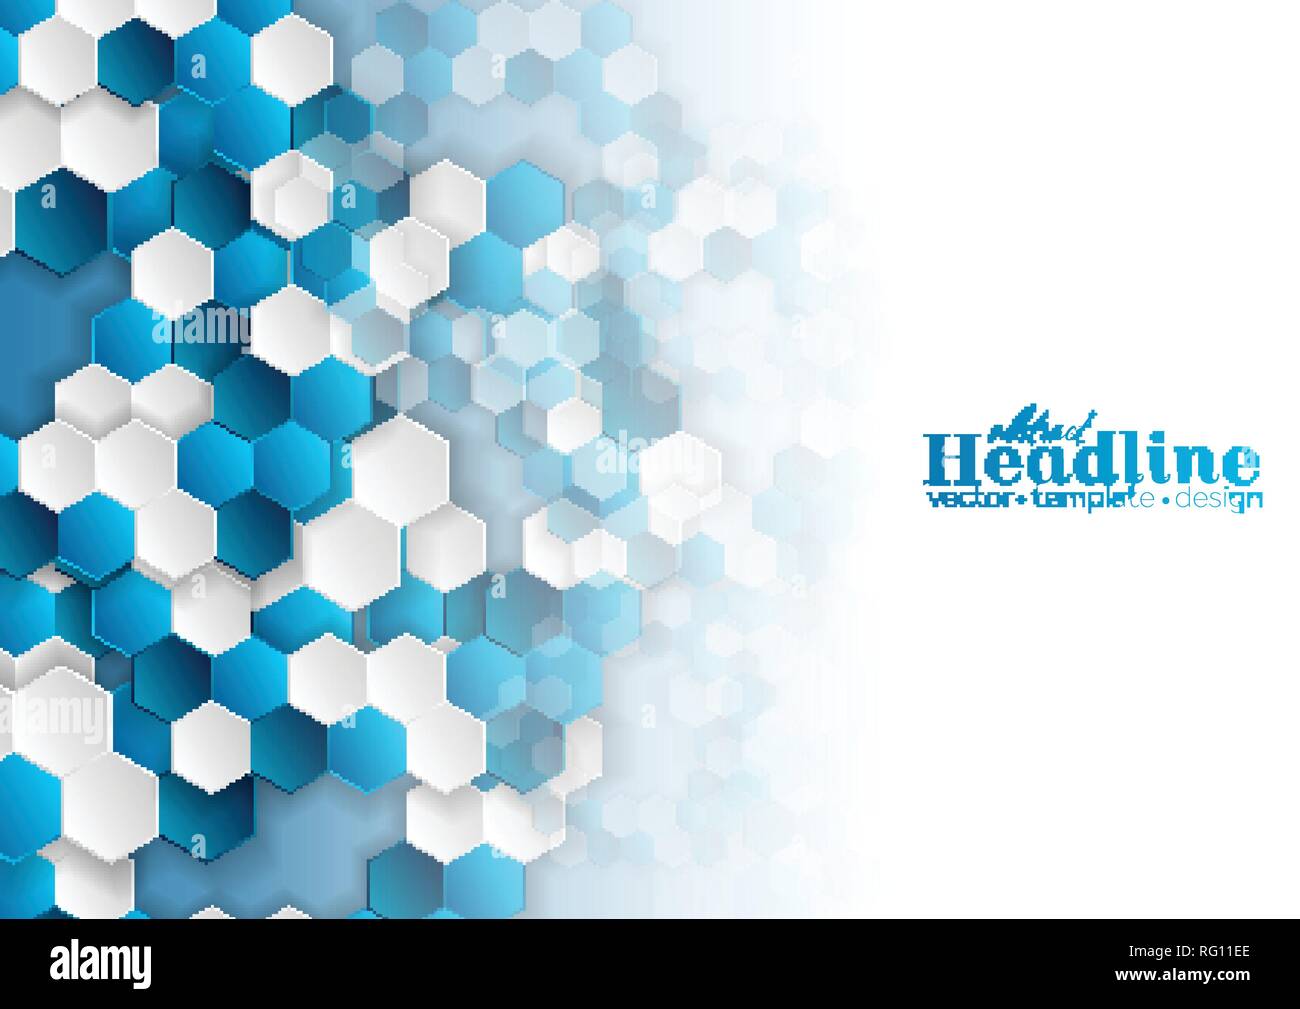 Download 770 Background Vectors HD Terbaru